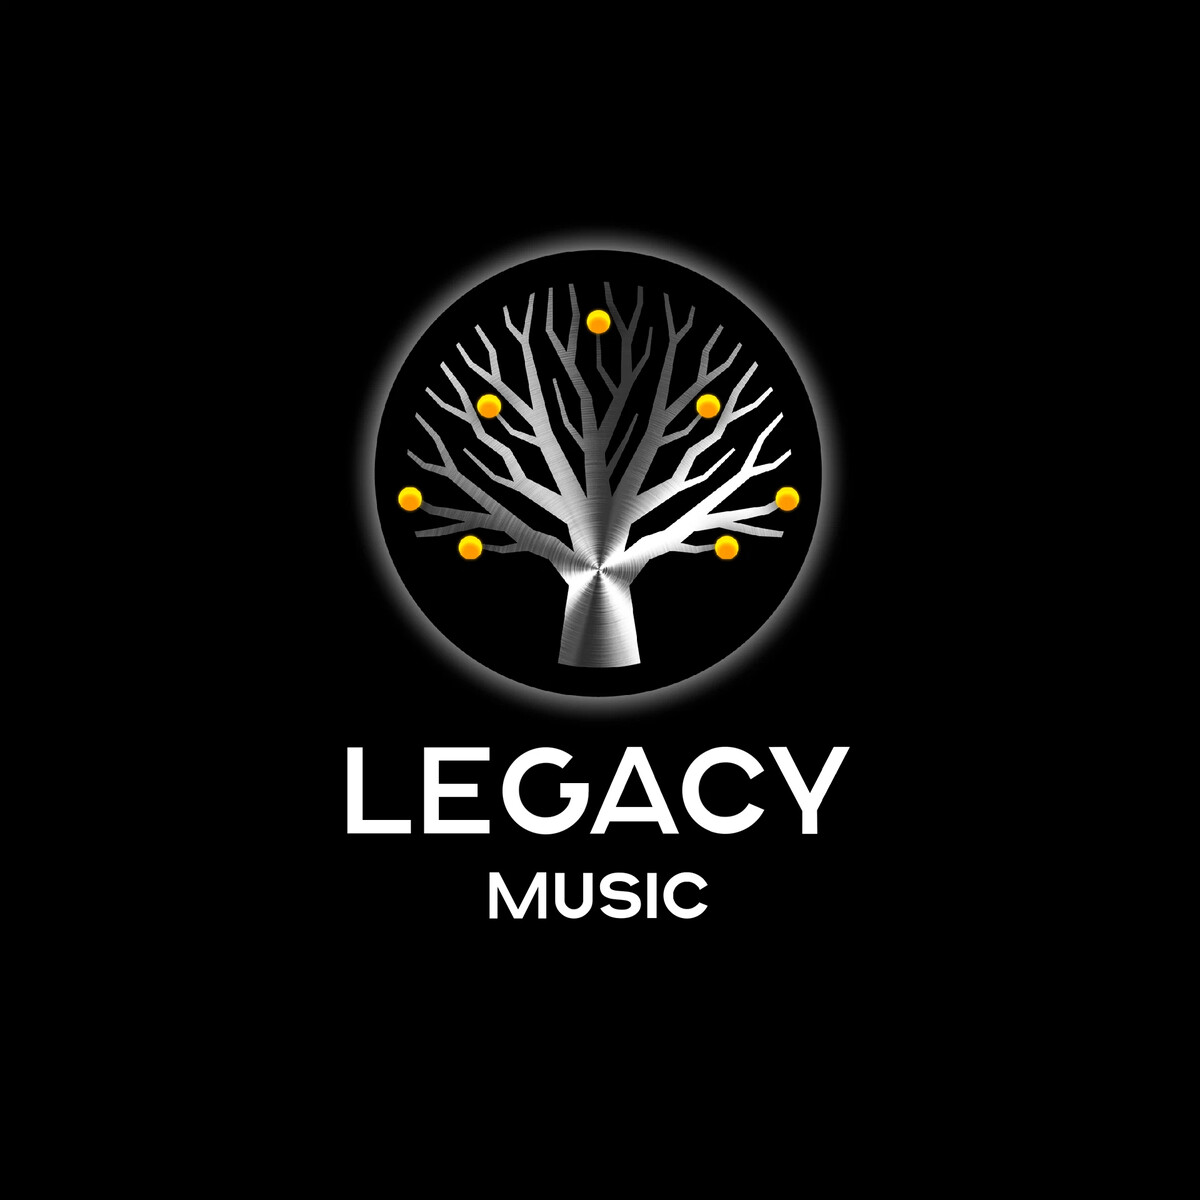 Legacy music